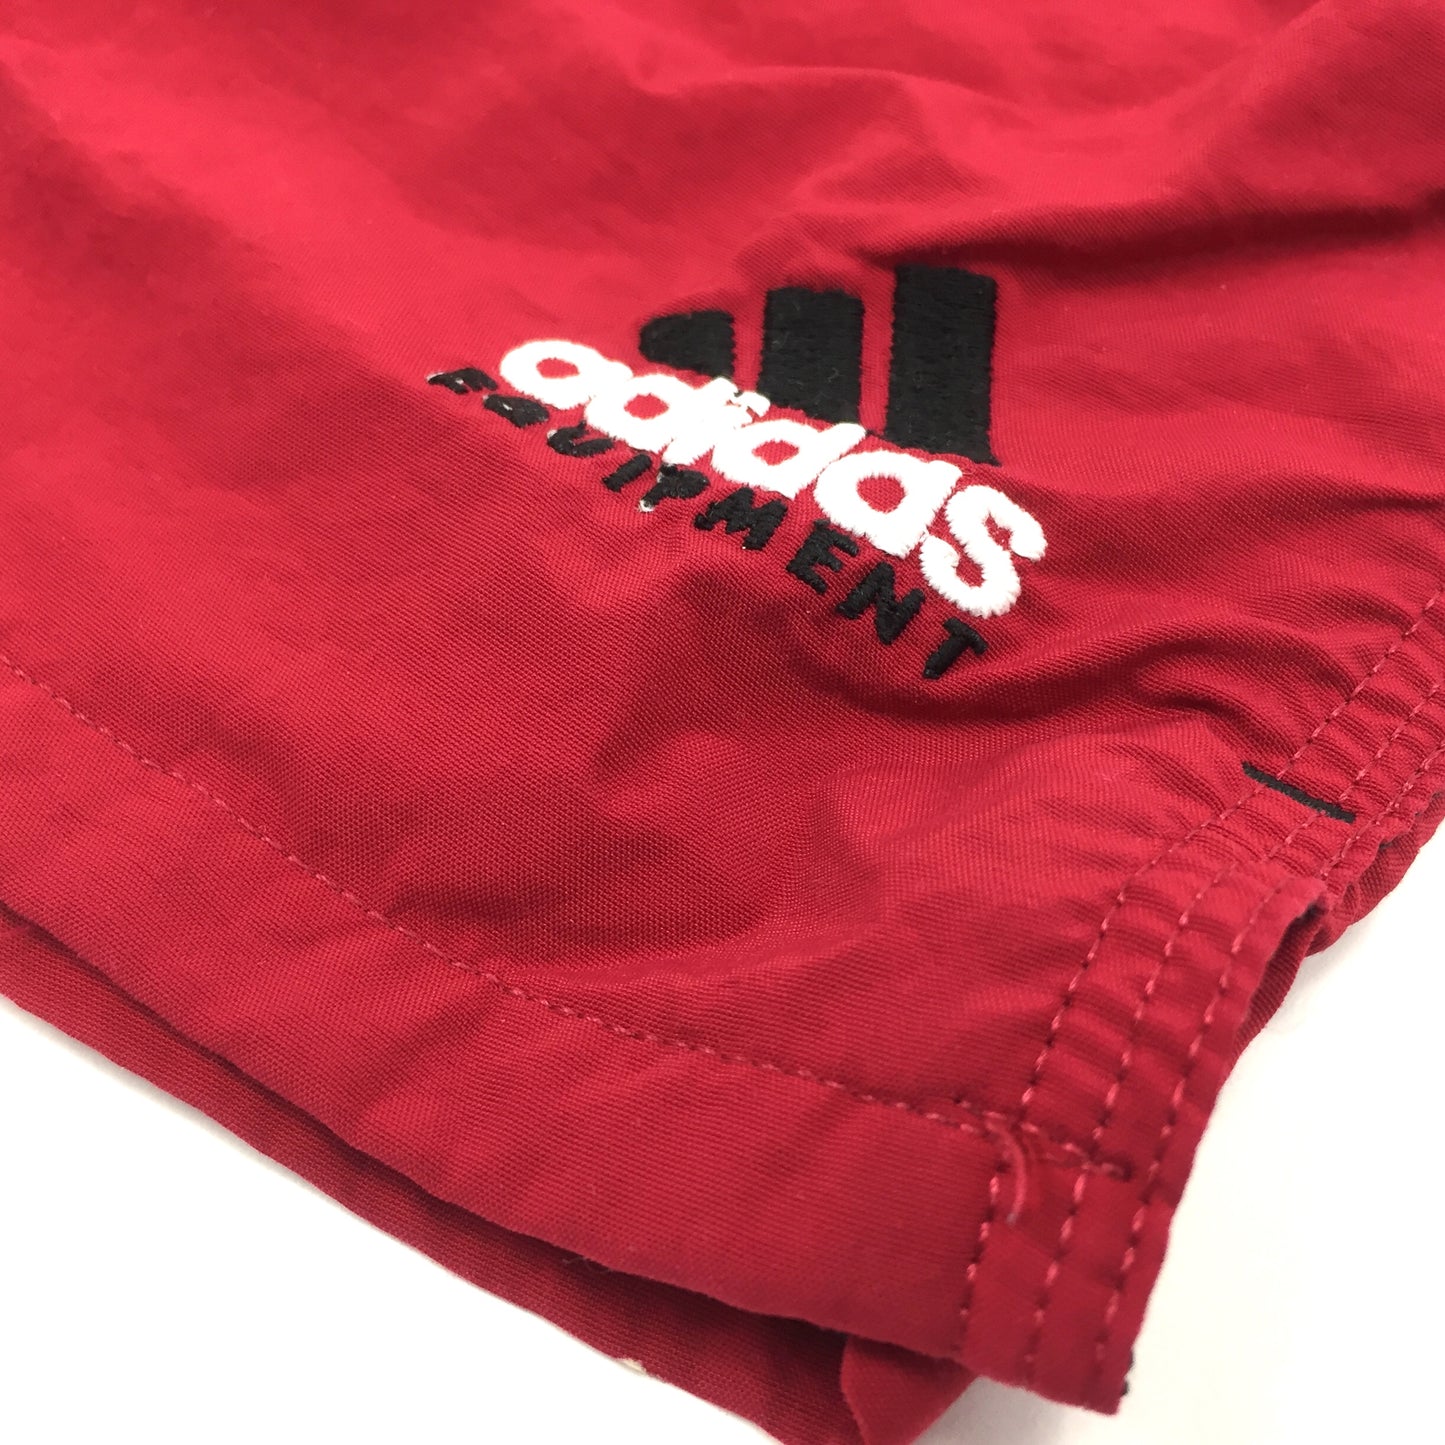 0460 Adidas Equipment Vintage Sweat Shorts